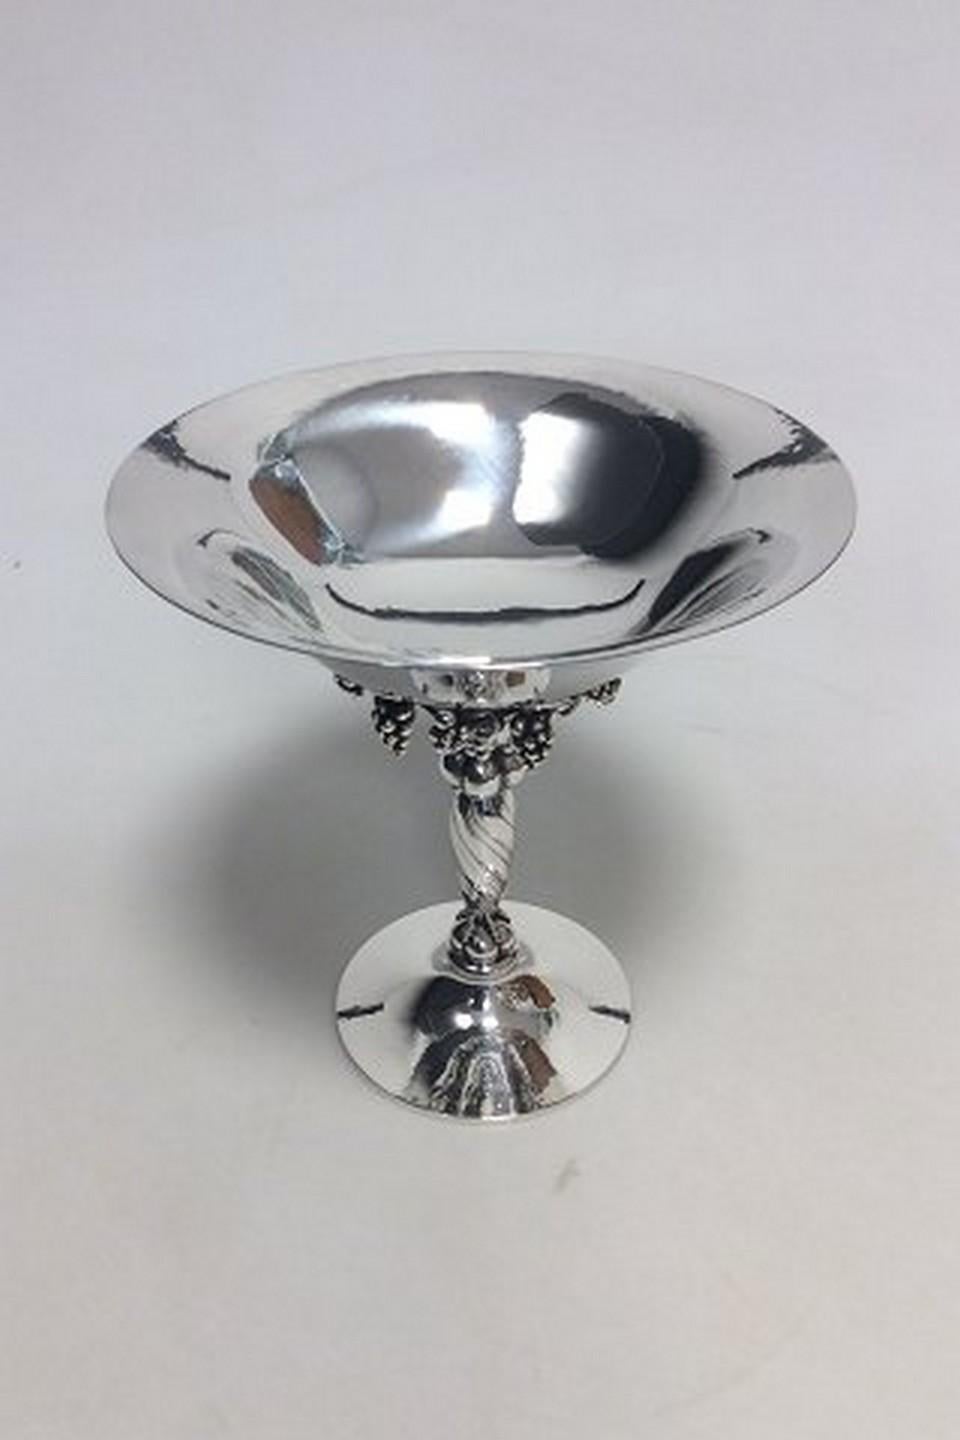 Georg Jensen sterling silver grape bowl no 263B.
Measures: 19 cm / 7 31/64 in. x 18.5 cm / 7 9/32 in. diameter
Weighs 605 g / 21.34 oz.
Item no.: 435493.